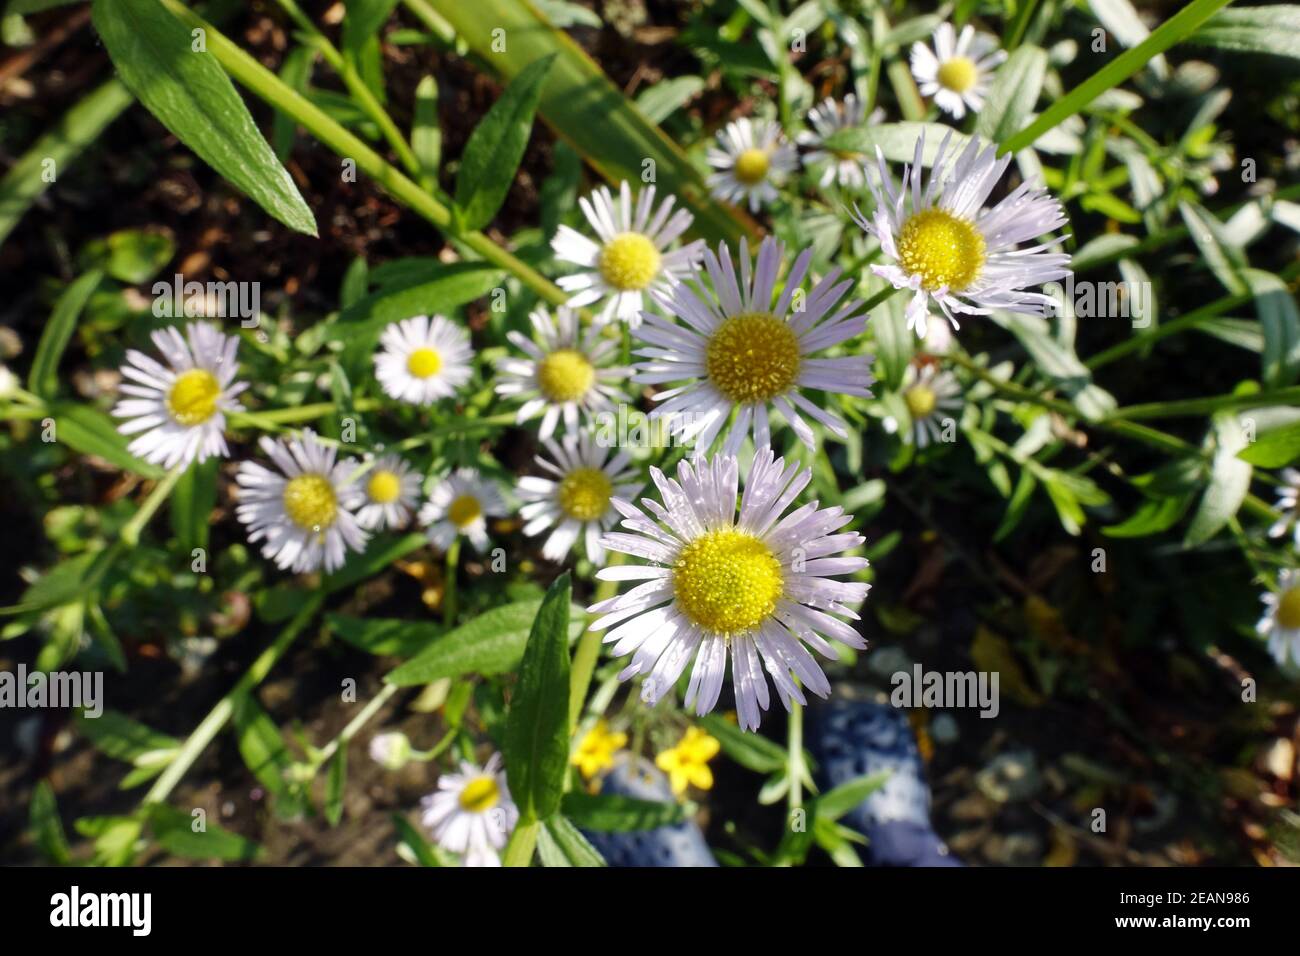 Fleabane annuali, daisy fleabane, o daisy fleabane orientali (Erigeron annuus), - gocce di rugiada sui fiori Foto Stock